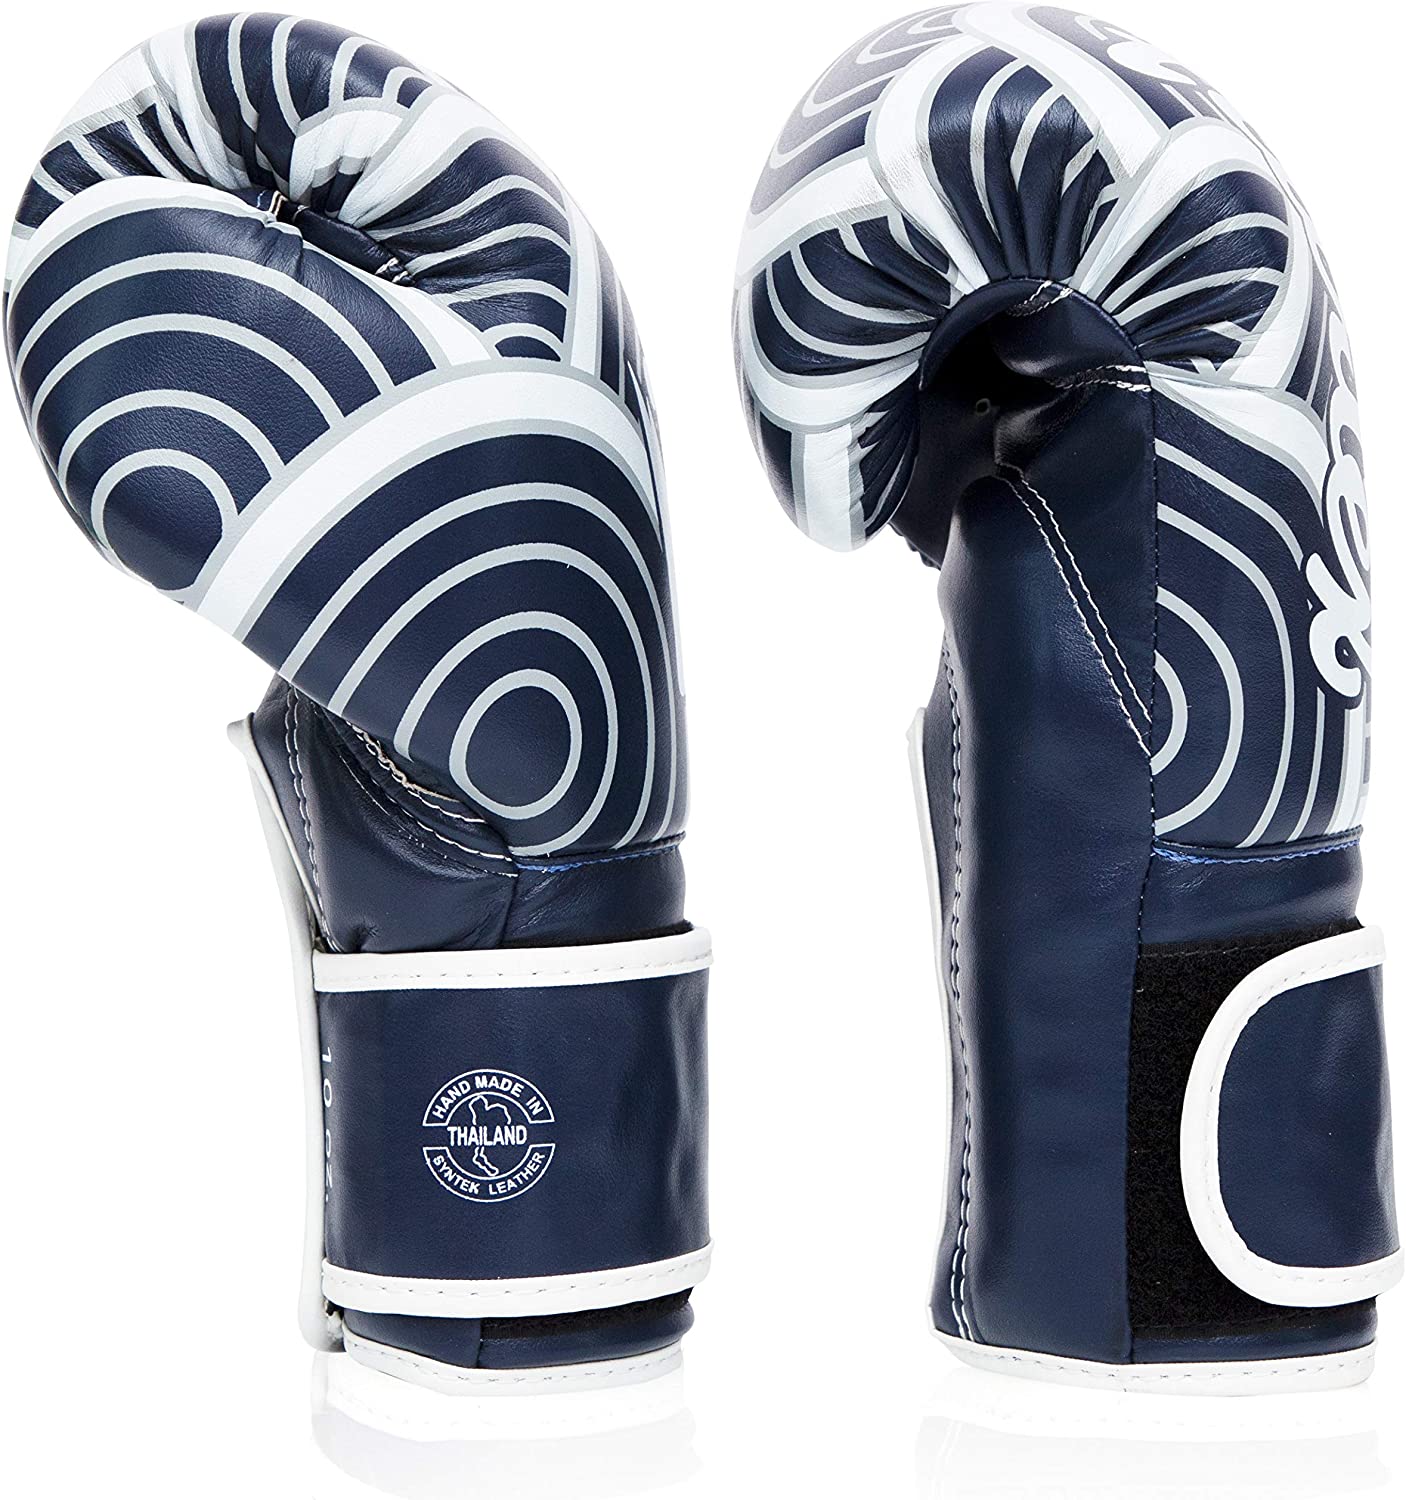 Fairtex - Japanese Art Muay Thai Boxing Gloves - BGV14 – Blue side